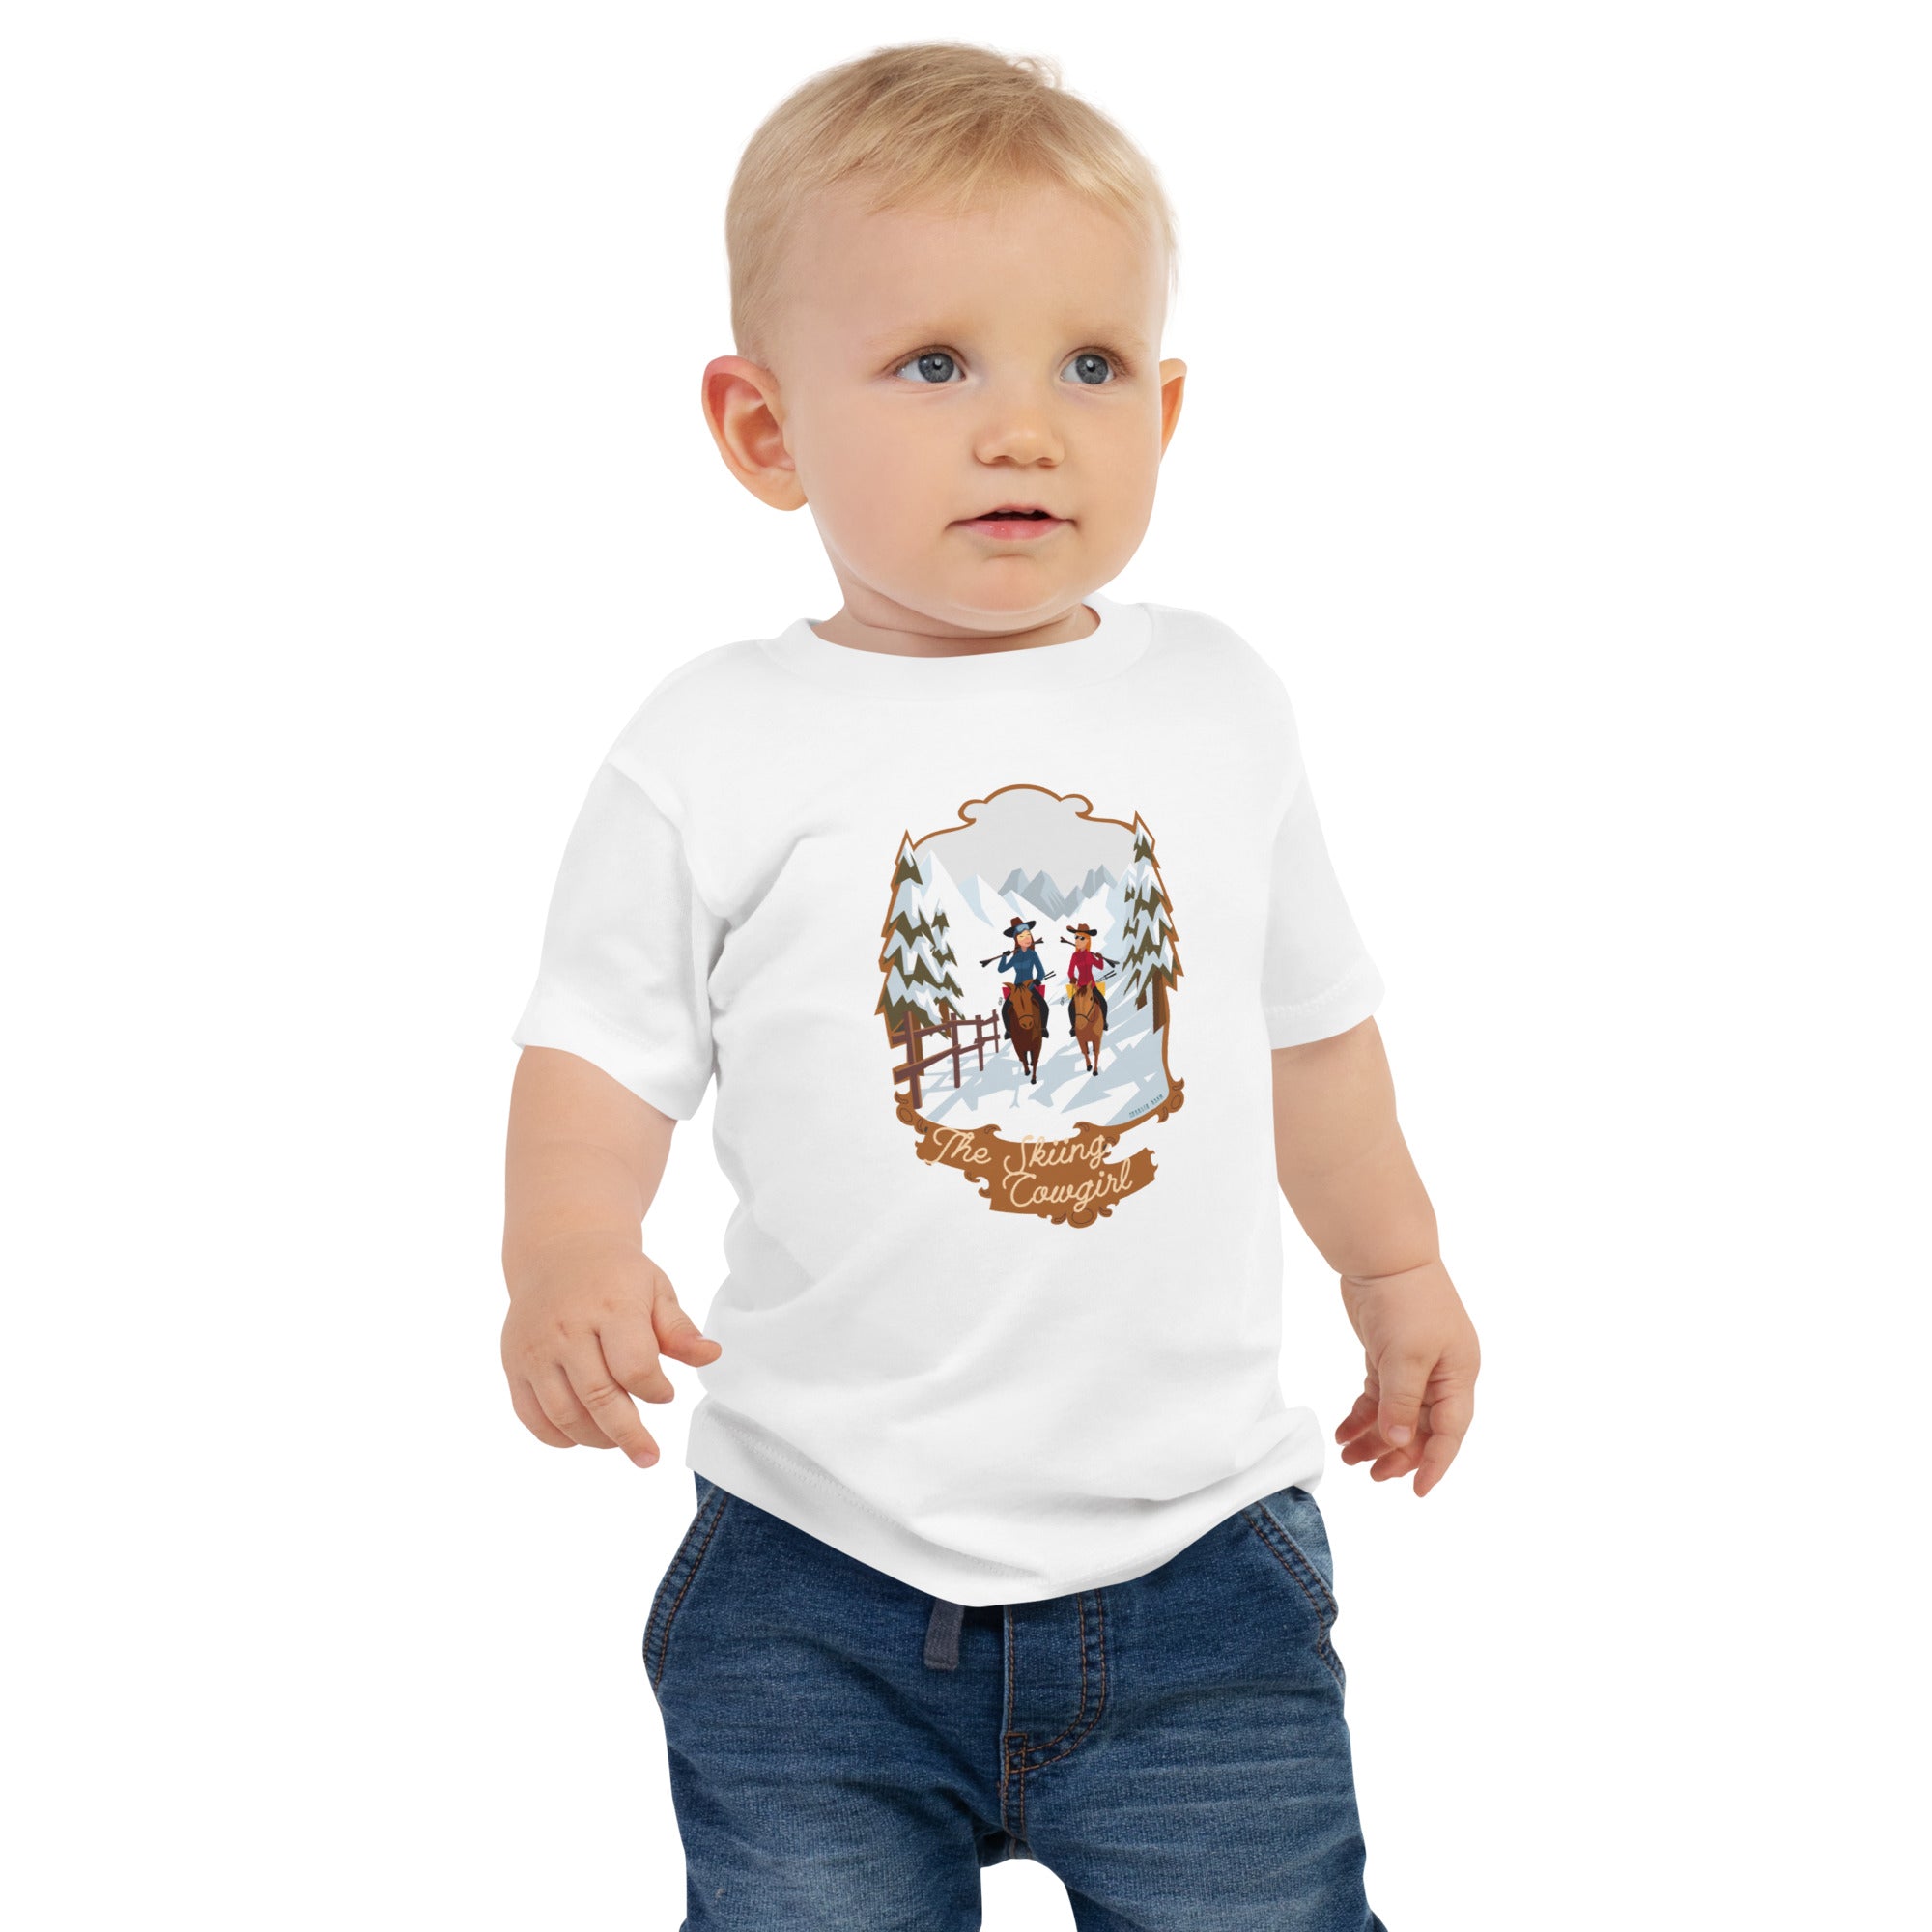 T-shirt pour bébé The Skiing Cowgirl